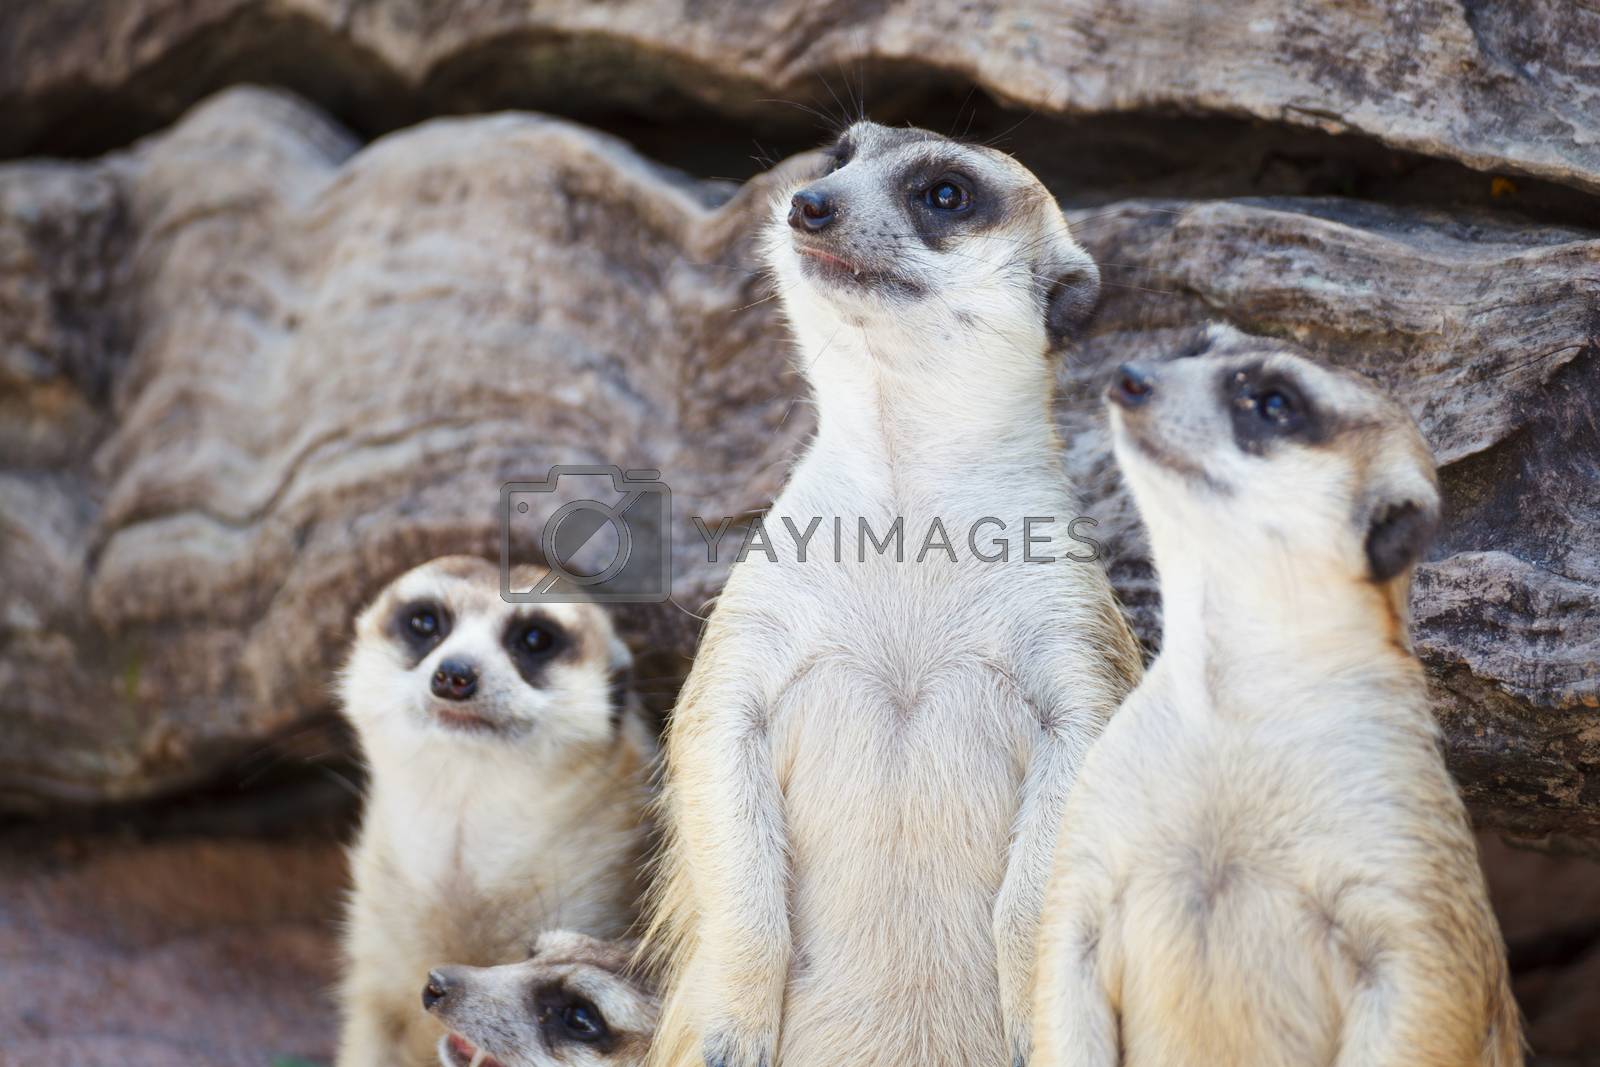 Royalty free image of alert meerkat (Suricata suricatta) standing and looking around f by FrameAngel